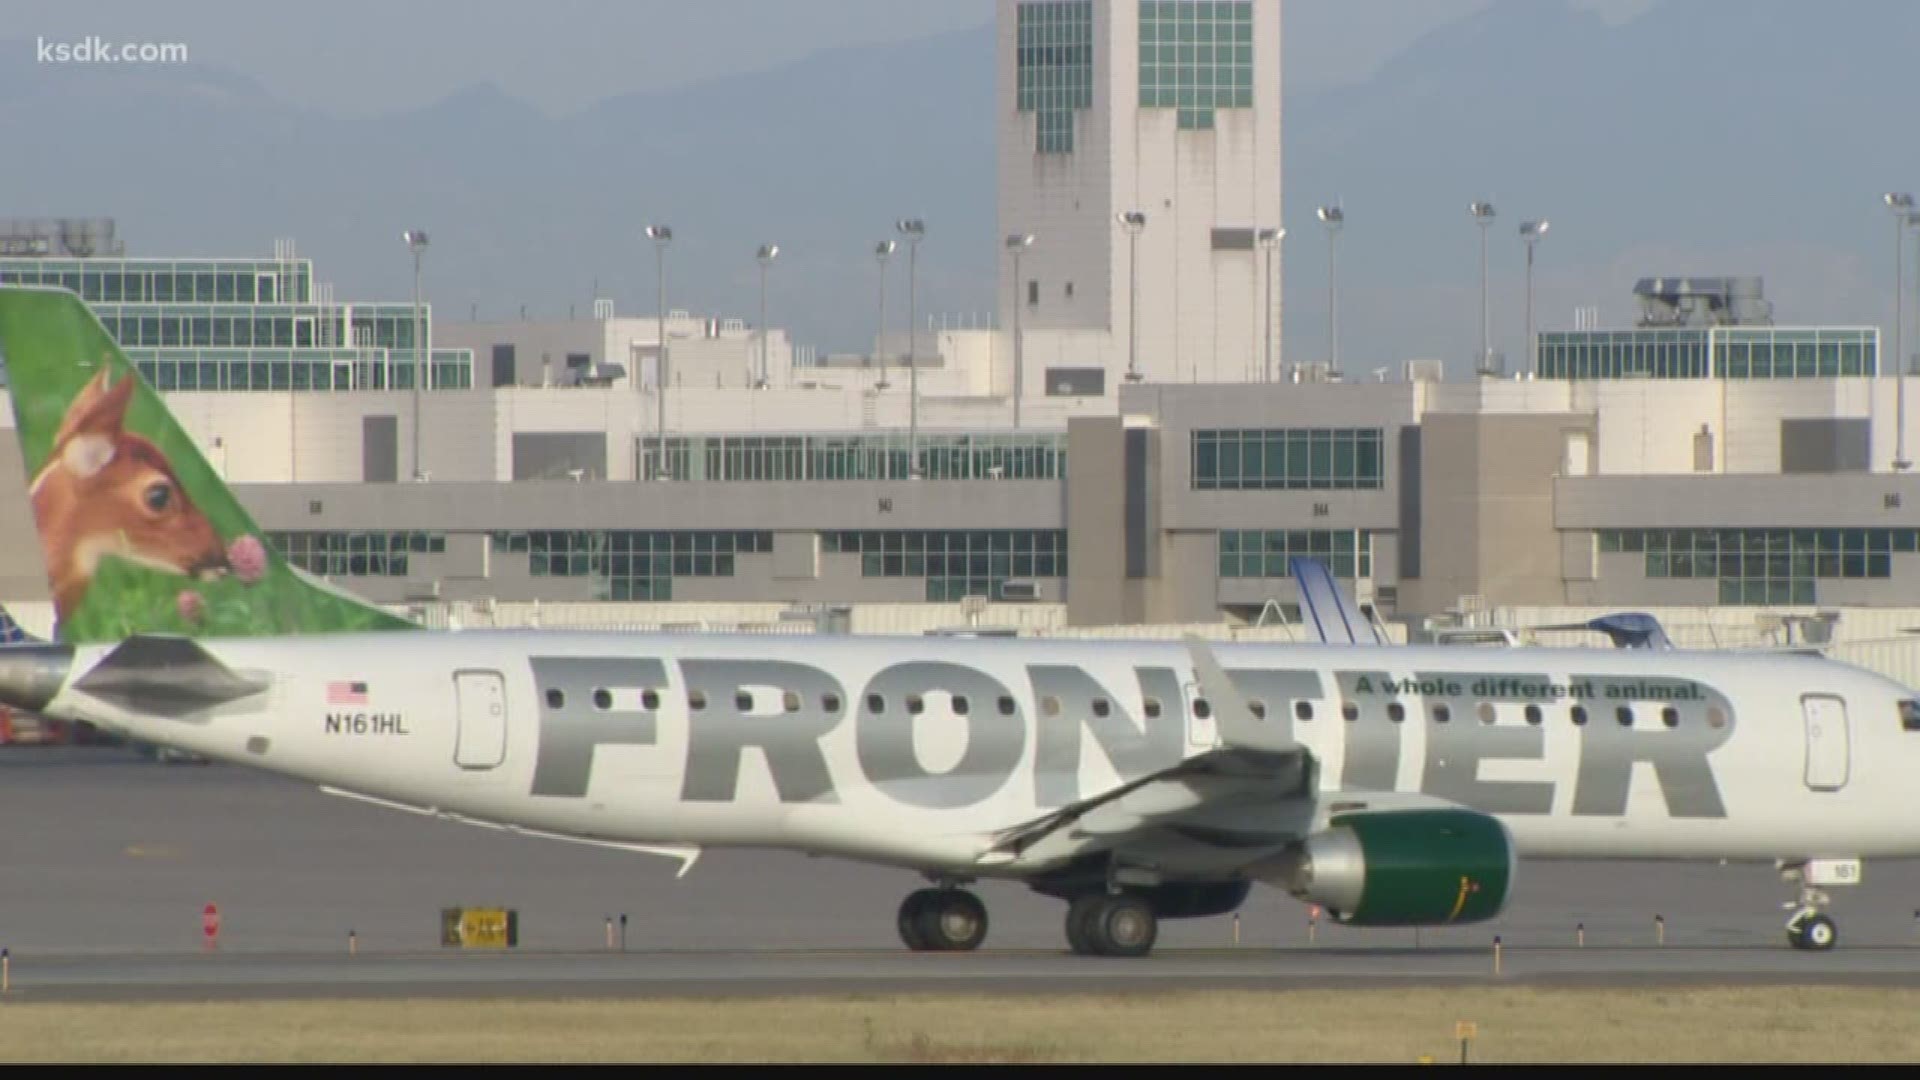 Frontier offering $29 flights to Tampa, $69 flights to Denver | 0